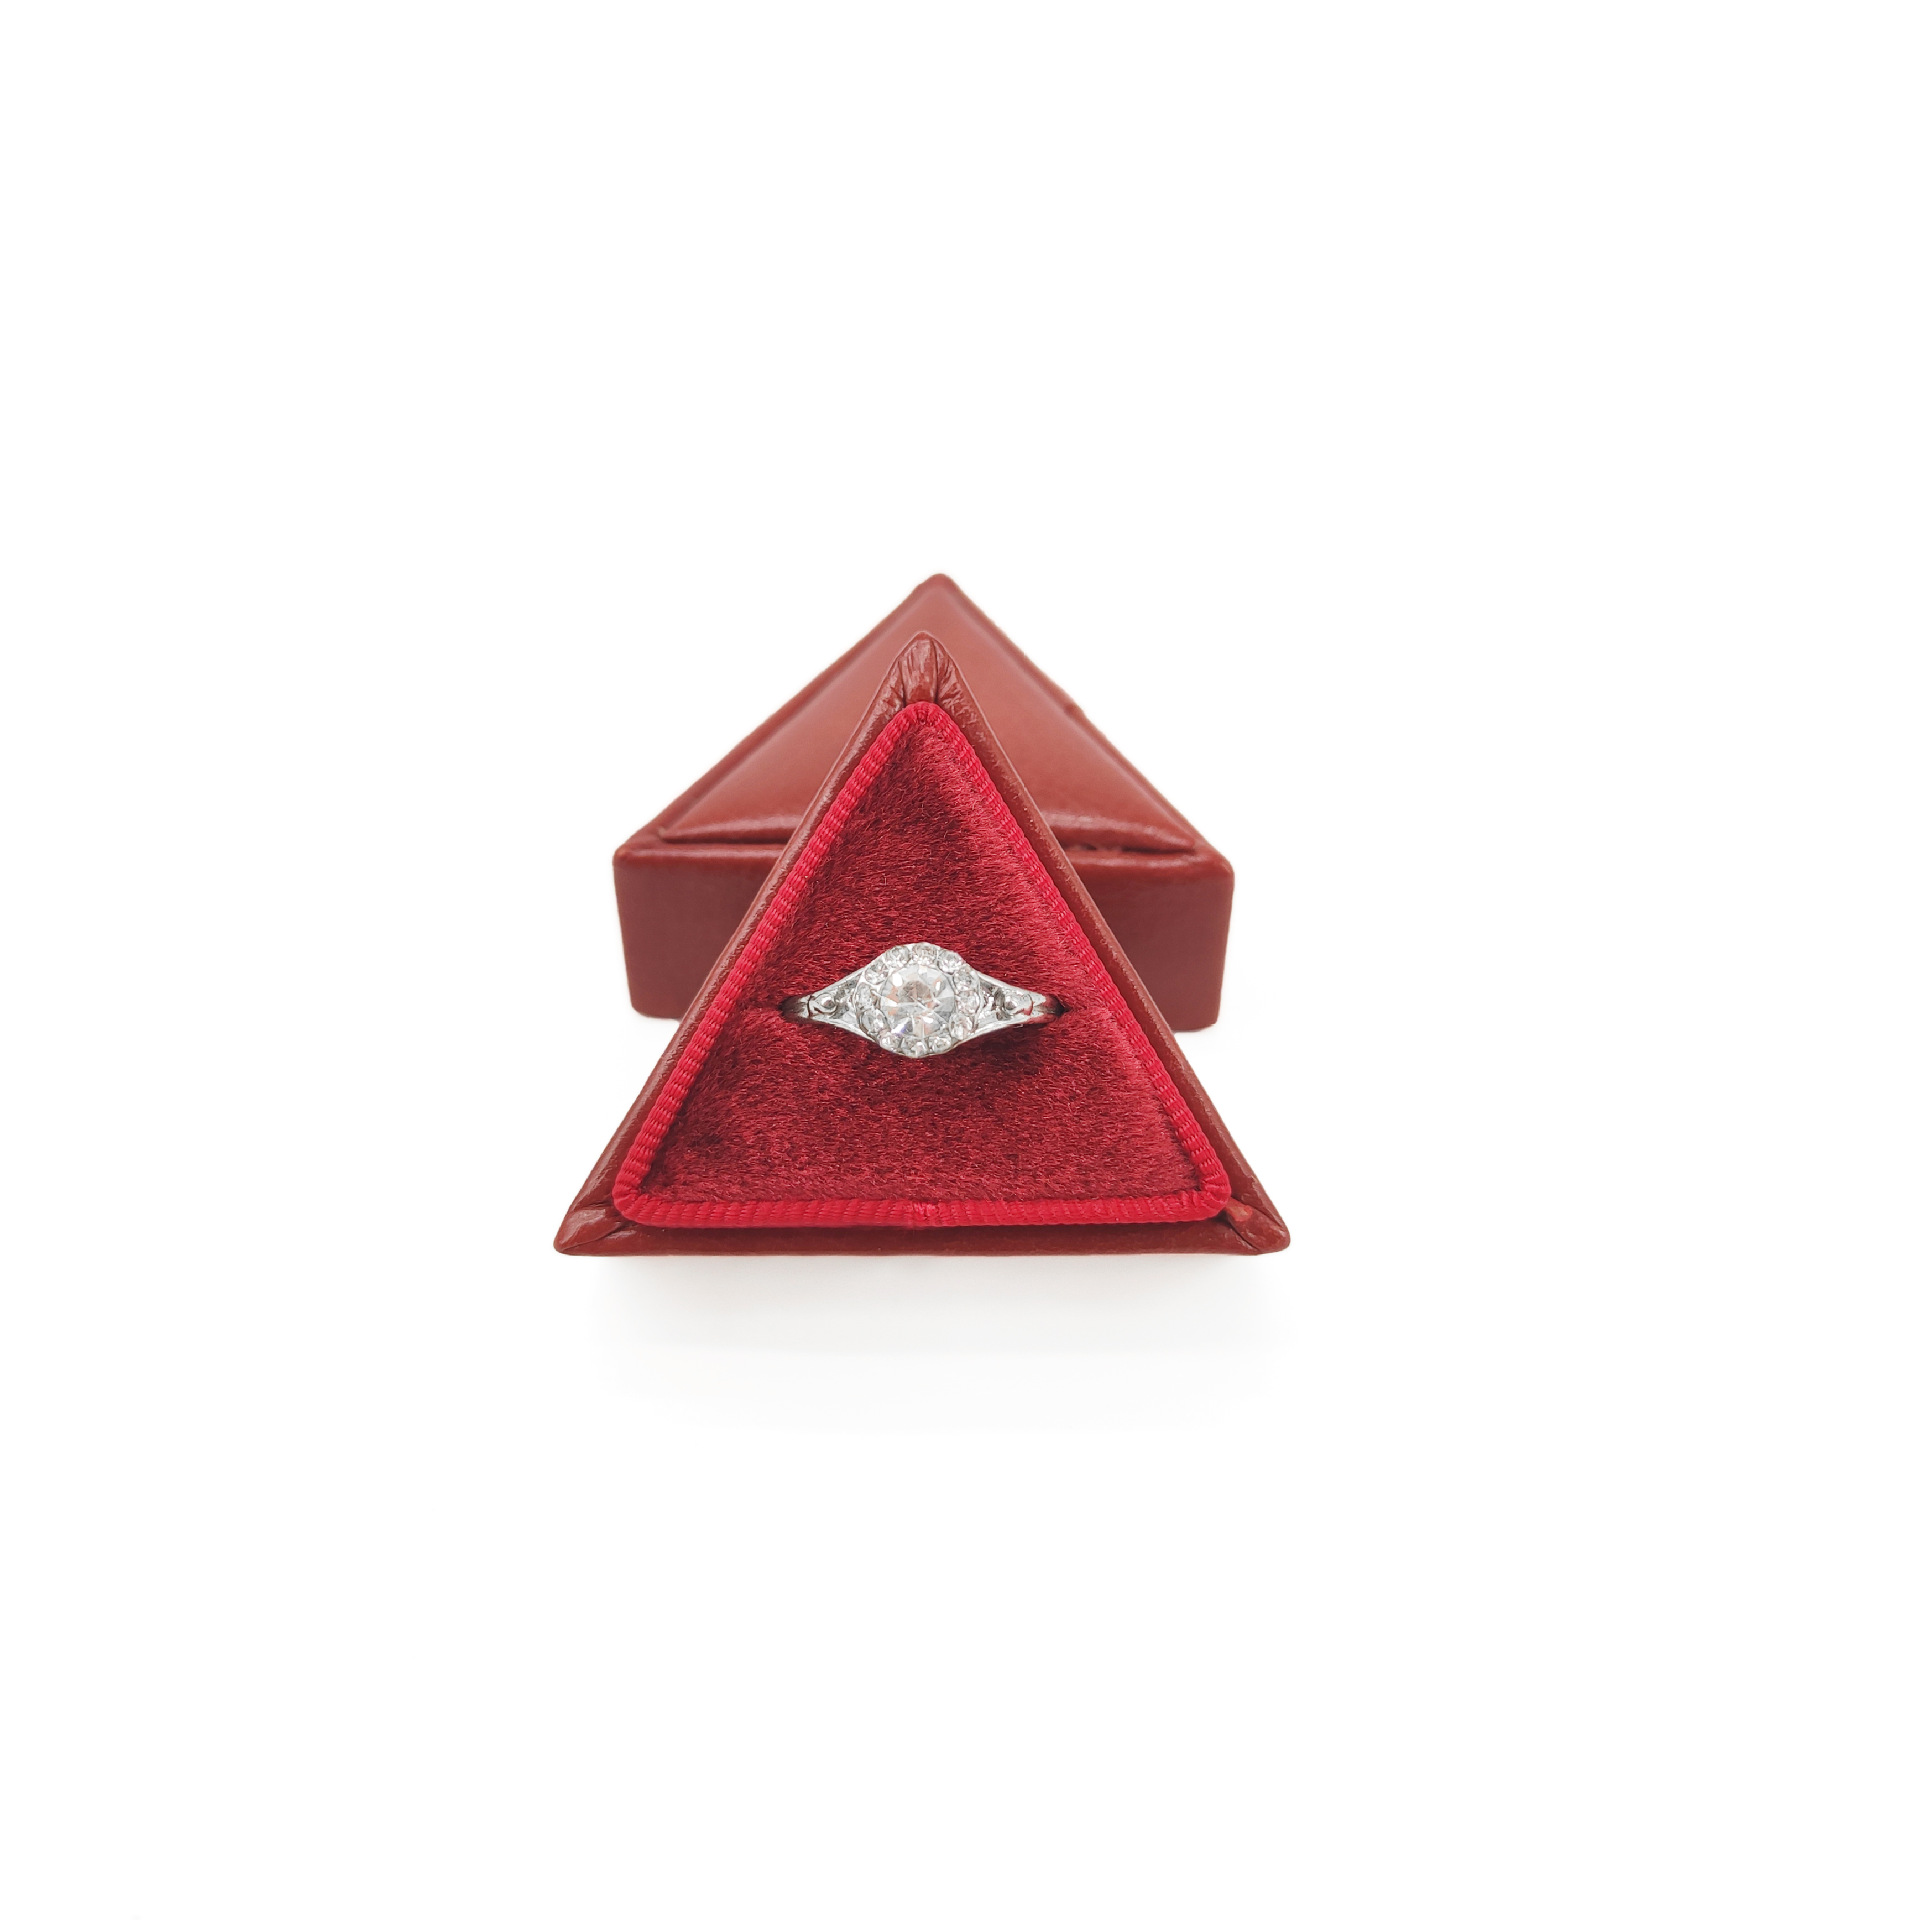 Triangular single ring